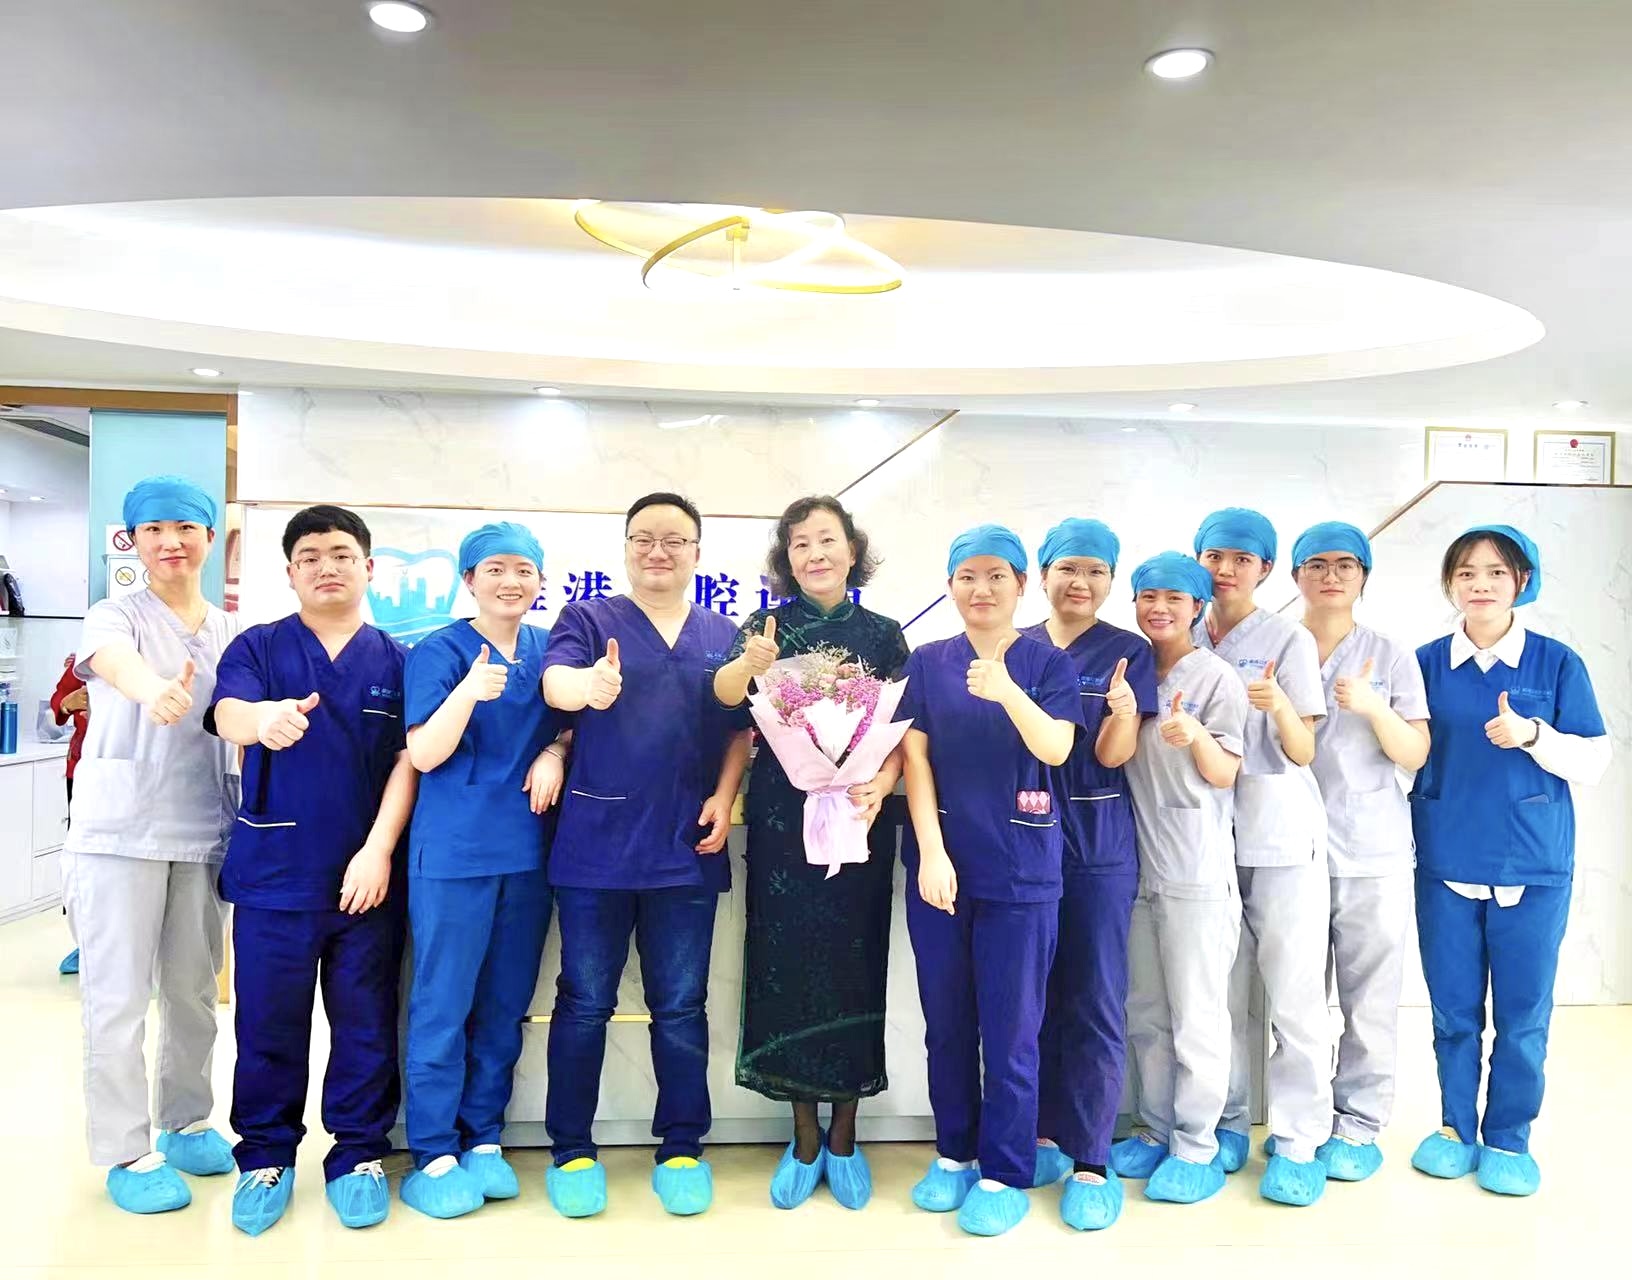 Tsinghua University Postdoctoral Symposium on Career Planning at Vickong Dental